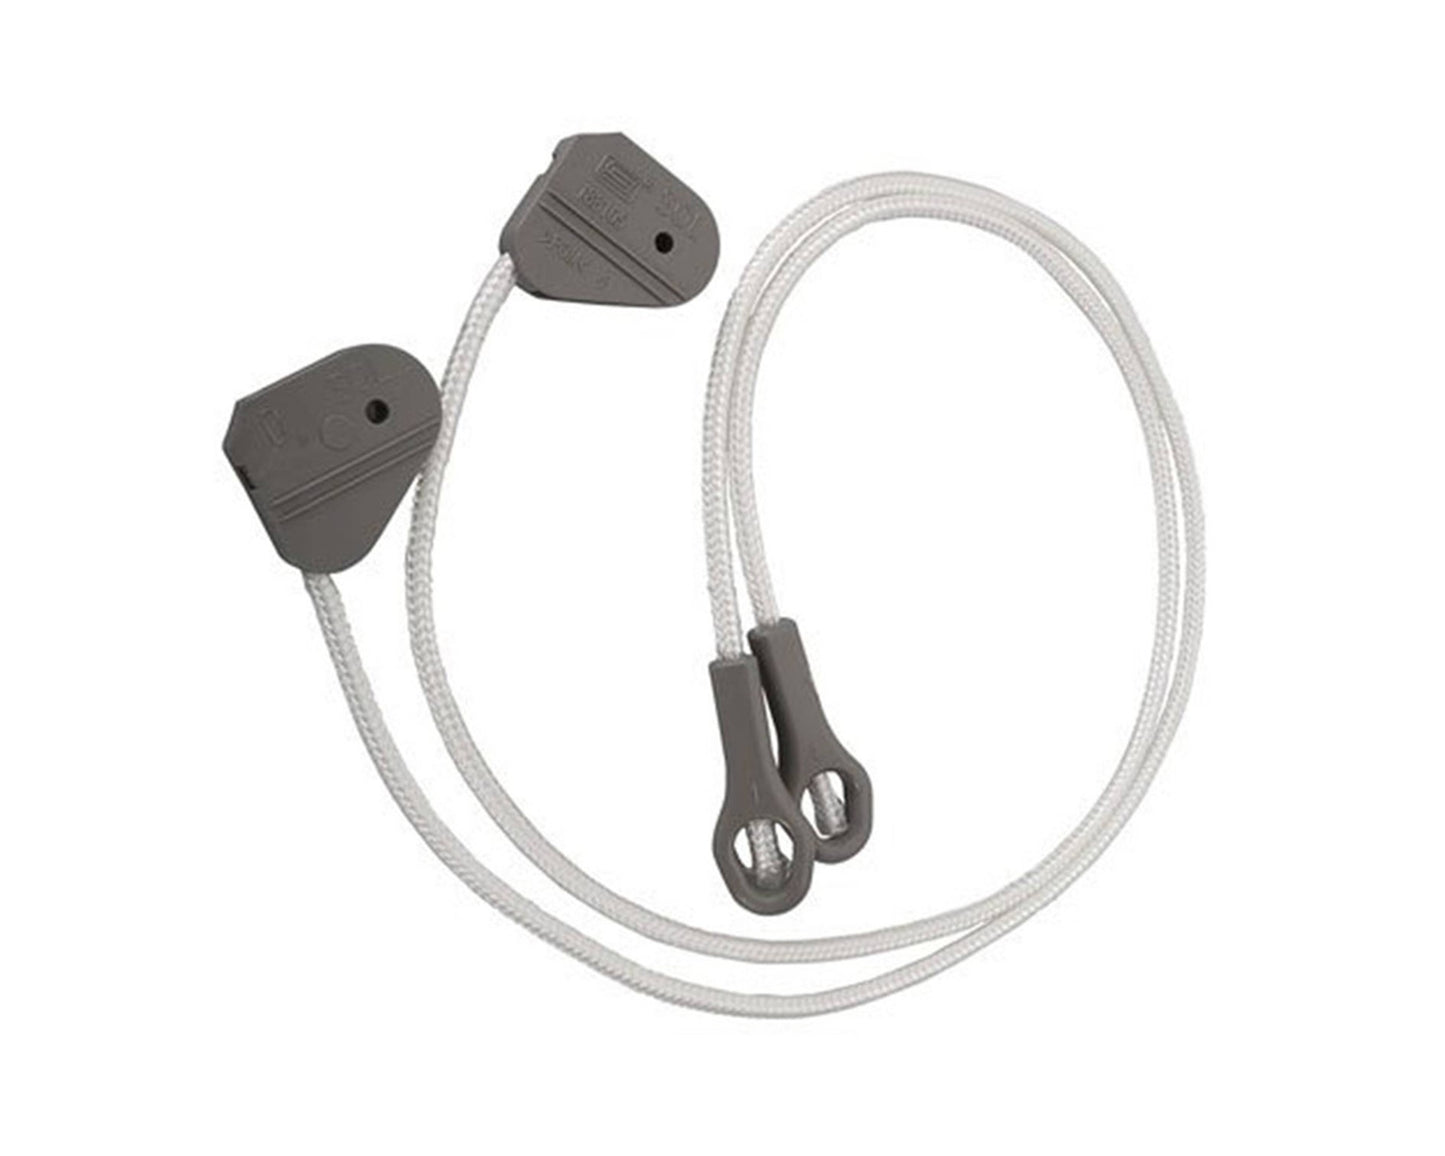 2 x Dishwasher Door Hinge Brake Cord Rope Cable for Whirlpool ADG332WH, ADG352AV, ADG352ME, ADG352WH, ADG45501IX